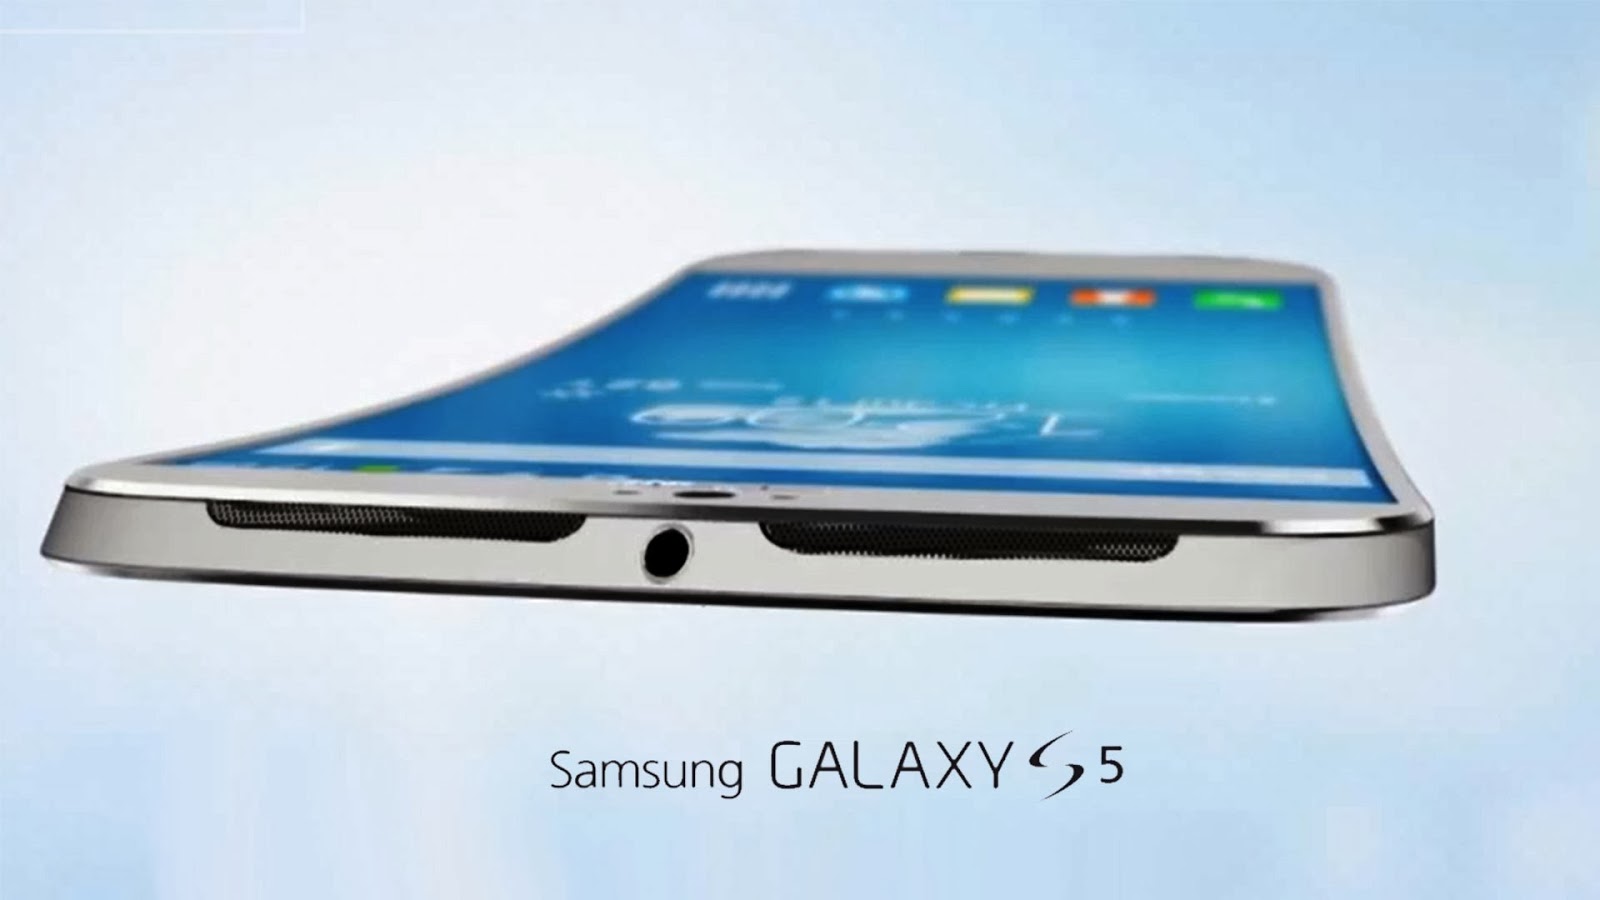 Samsung Galaxy S5 Images HD Wall Wallpapers   HD Wall Wallpapers